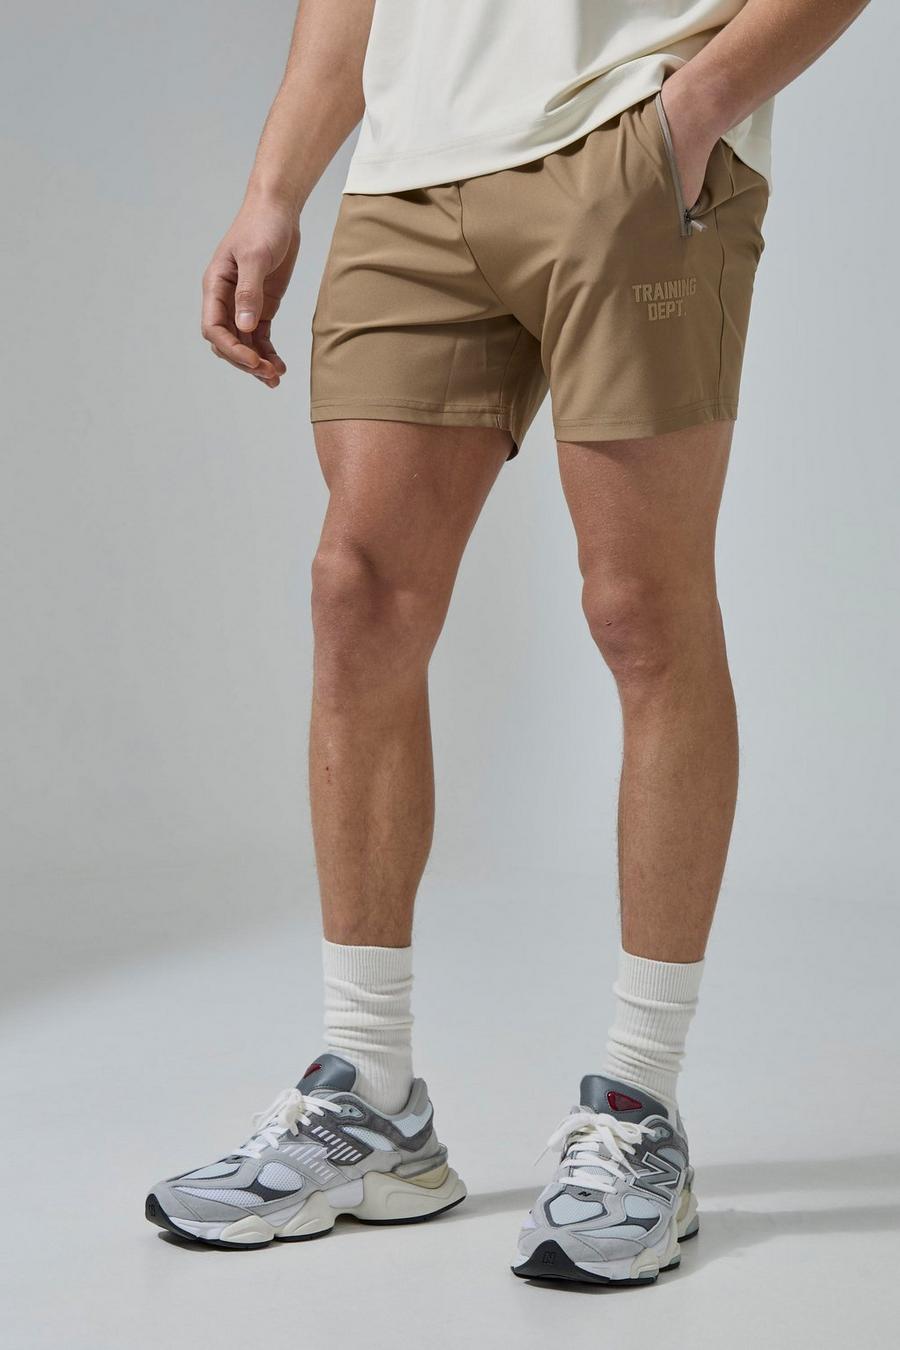 Pantaloncini Active Training Dept da 12 cm, Brown image number 1